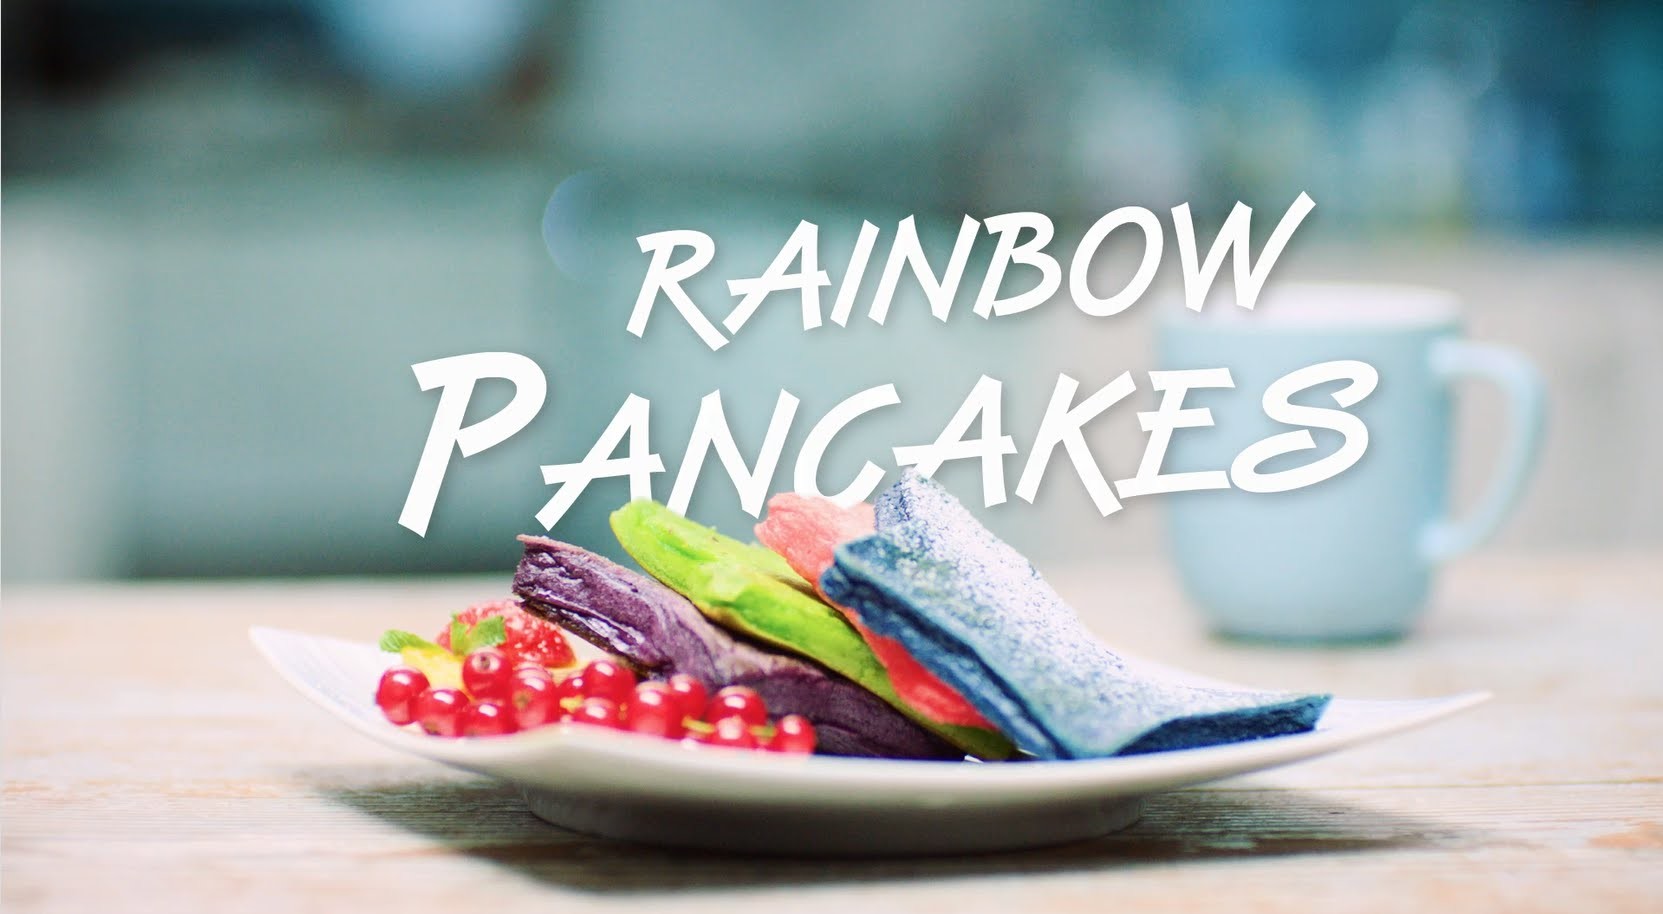 Rainbow Pancake Rezept: Backe bunte Pfannkuchen in Sternform